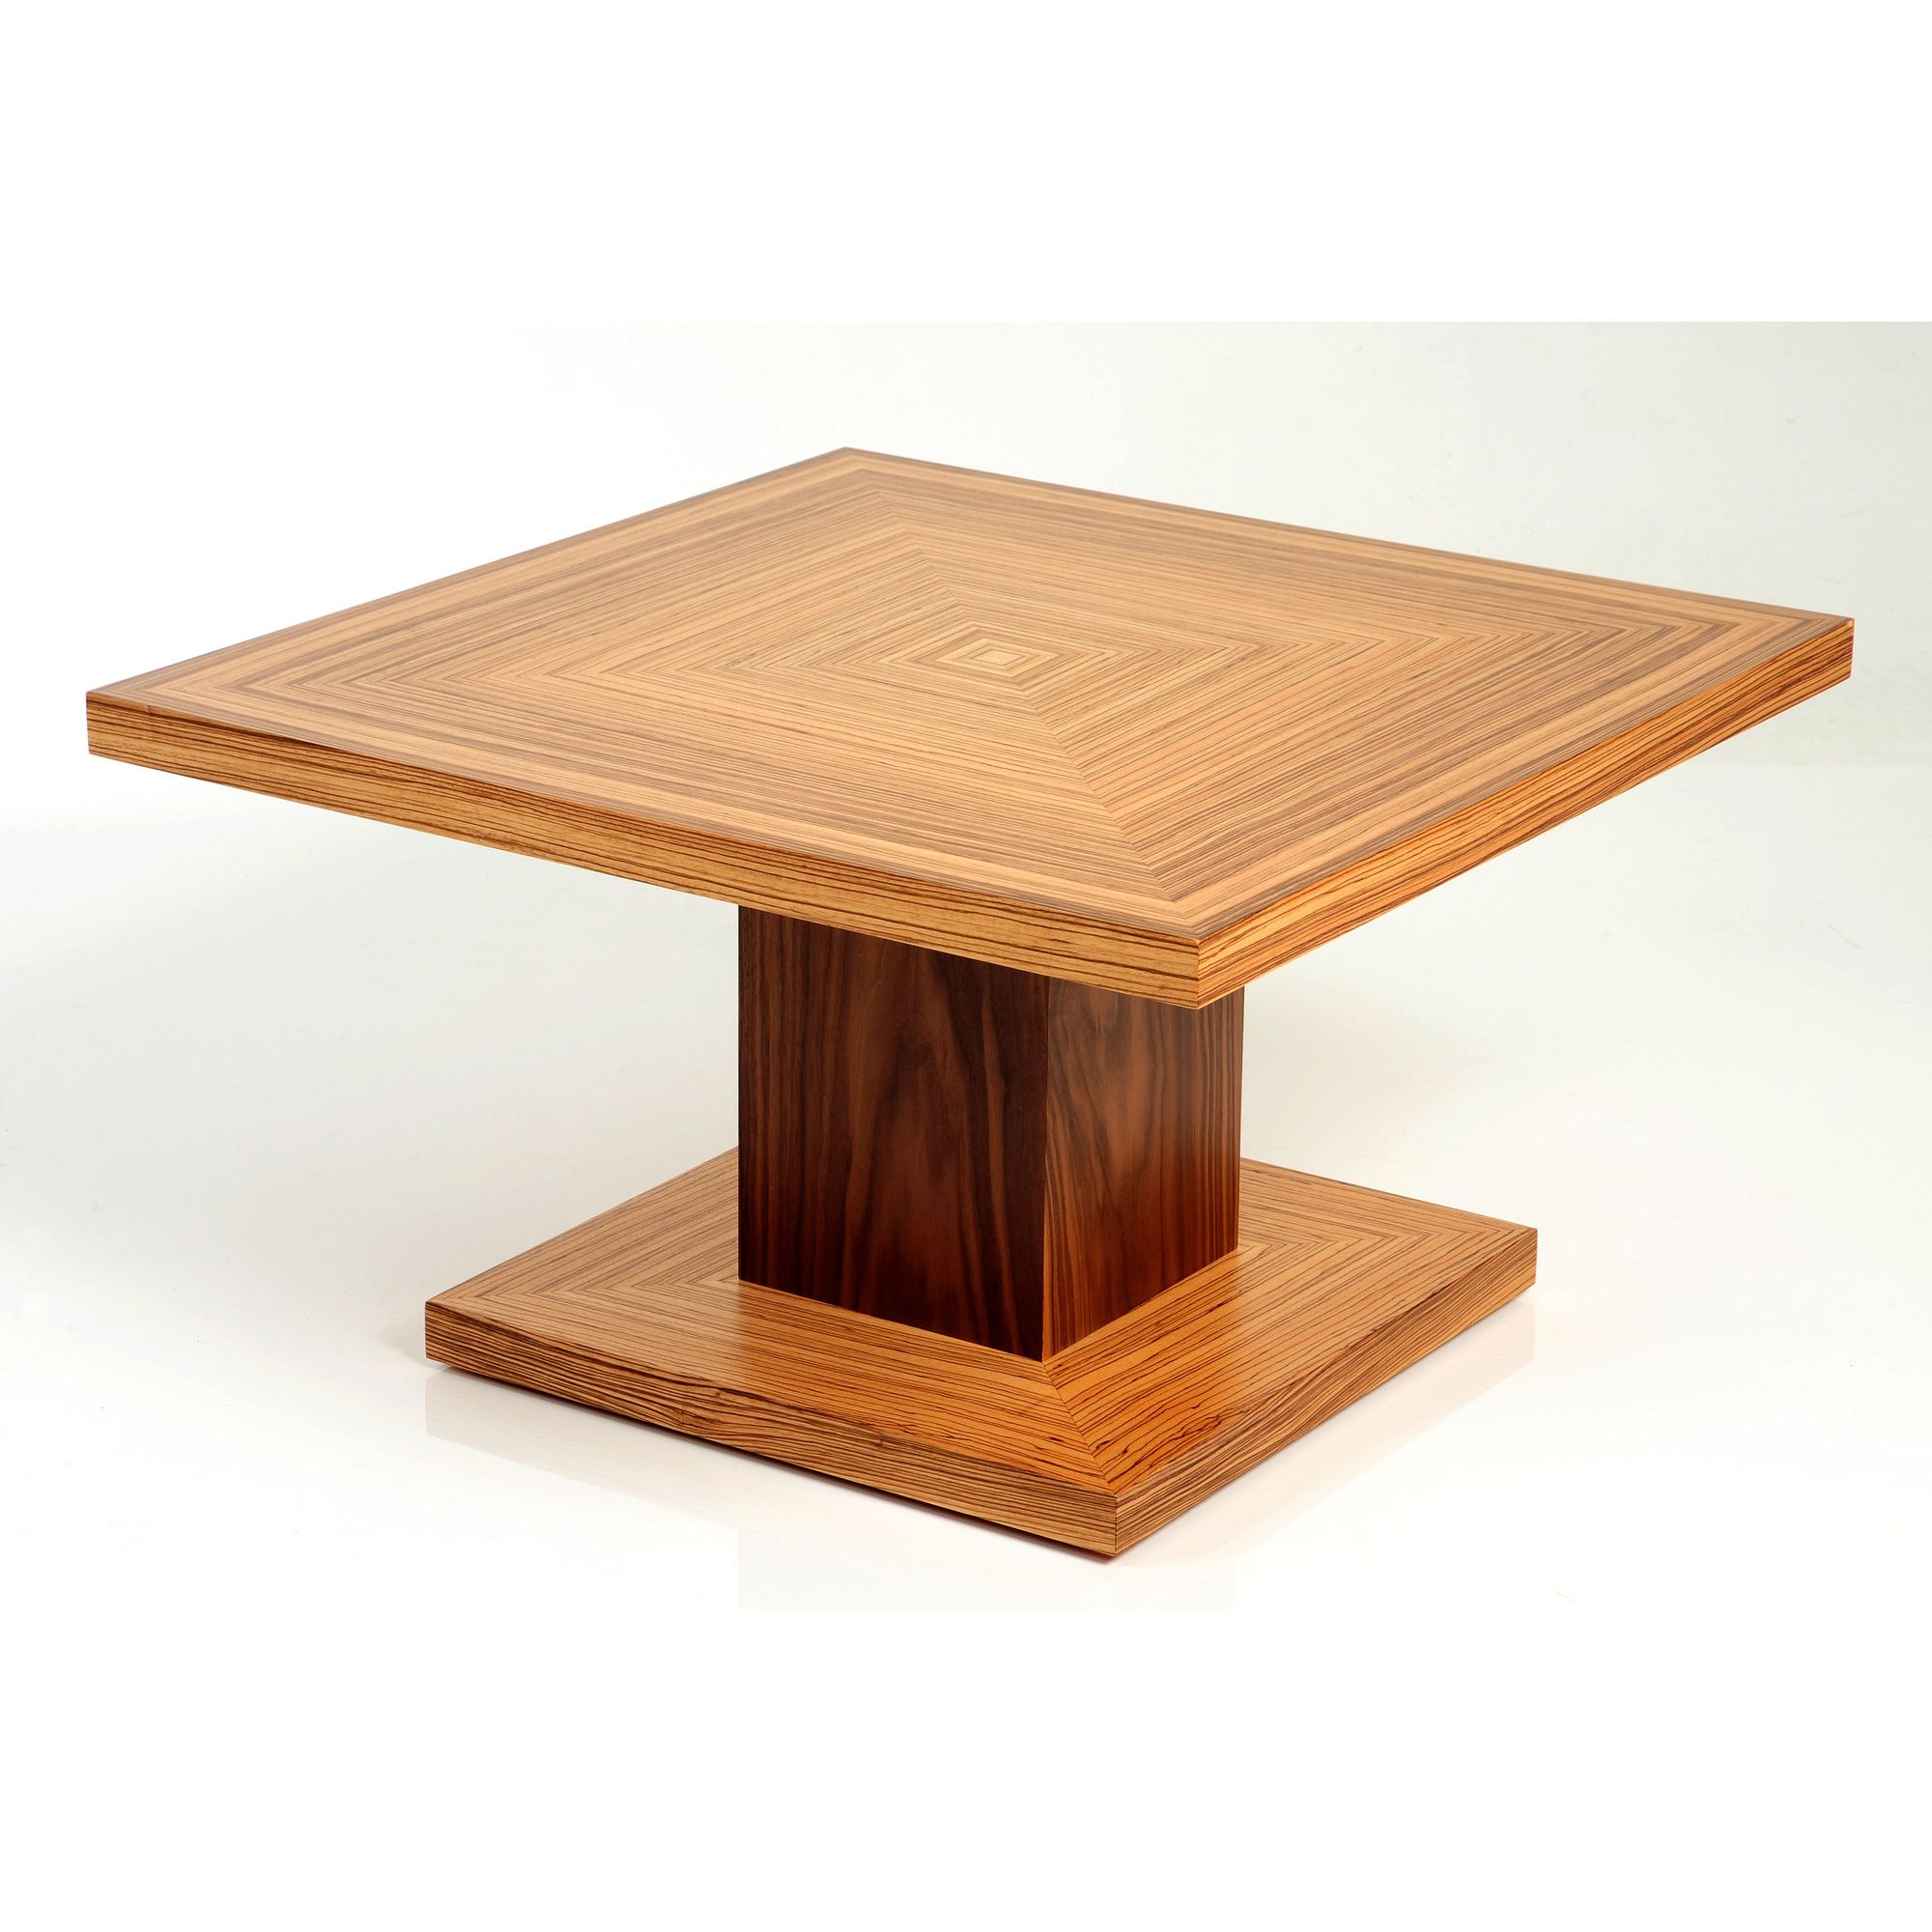 Trefurn Infinity Coffee Table - Fumed Oak at Tesco Direct